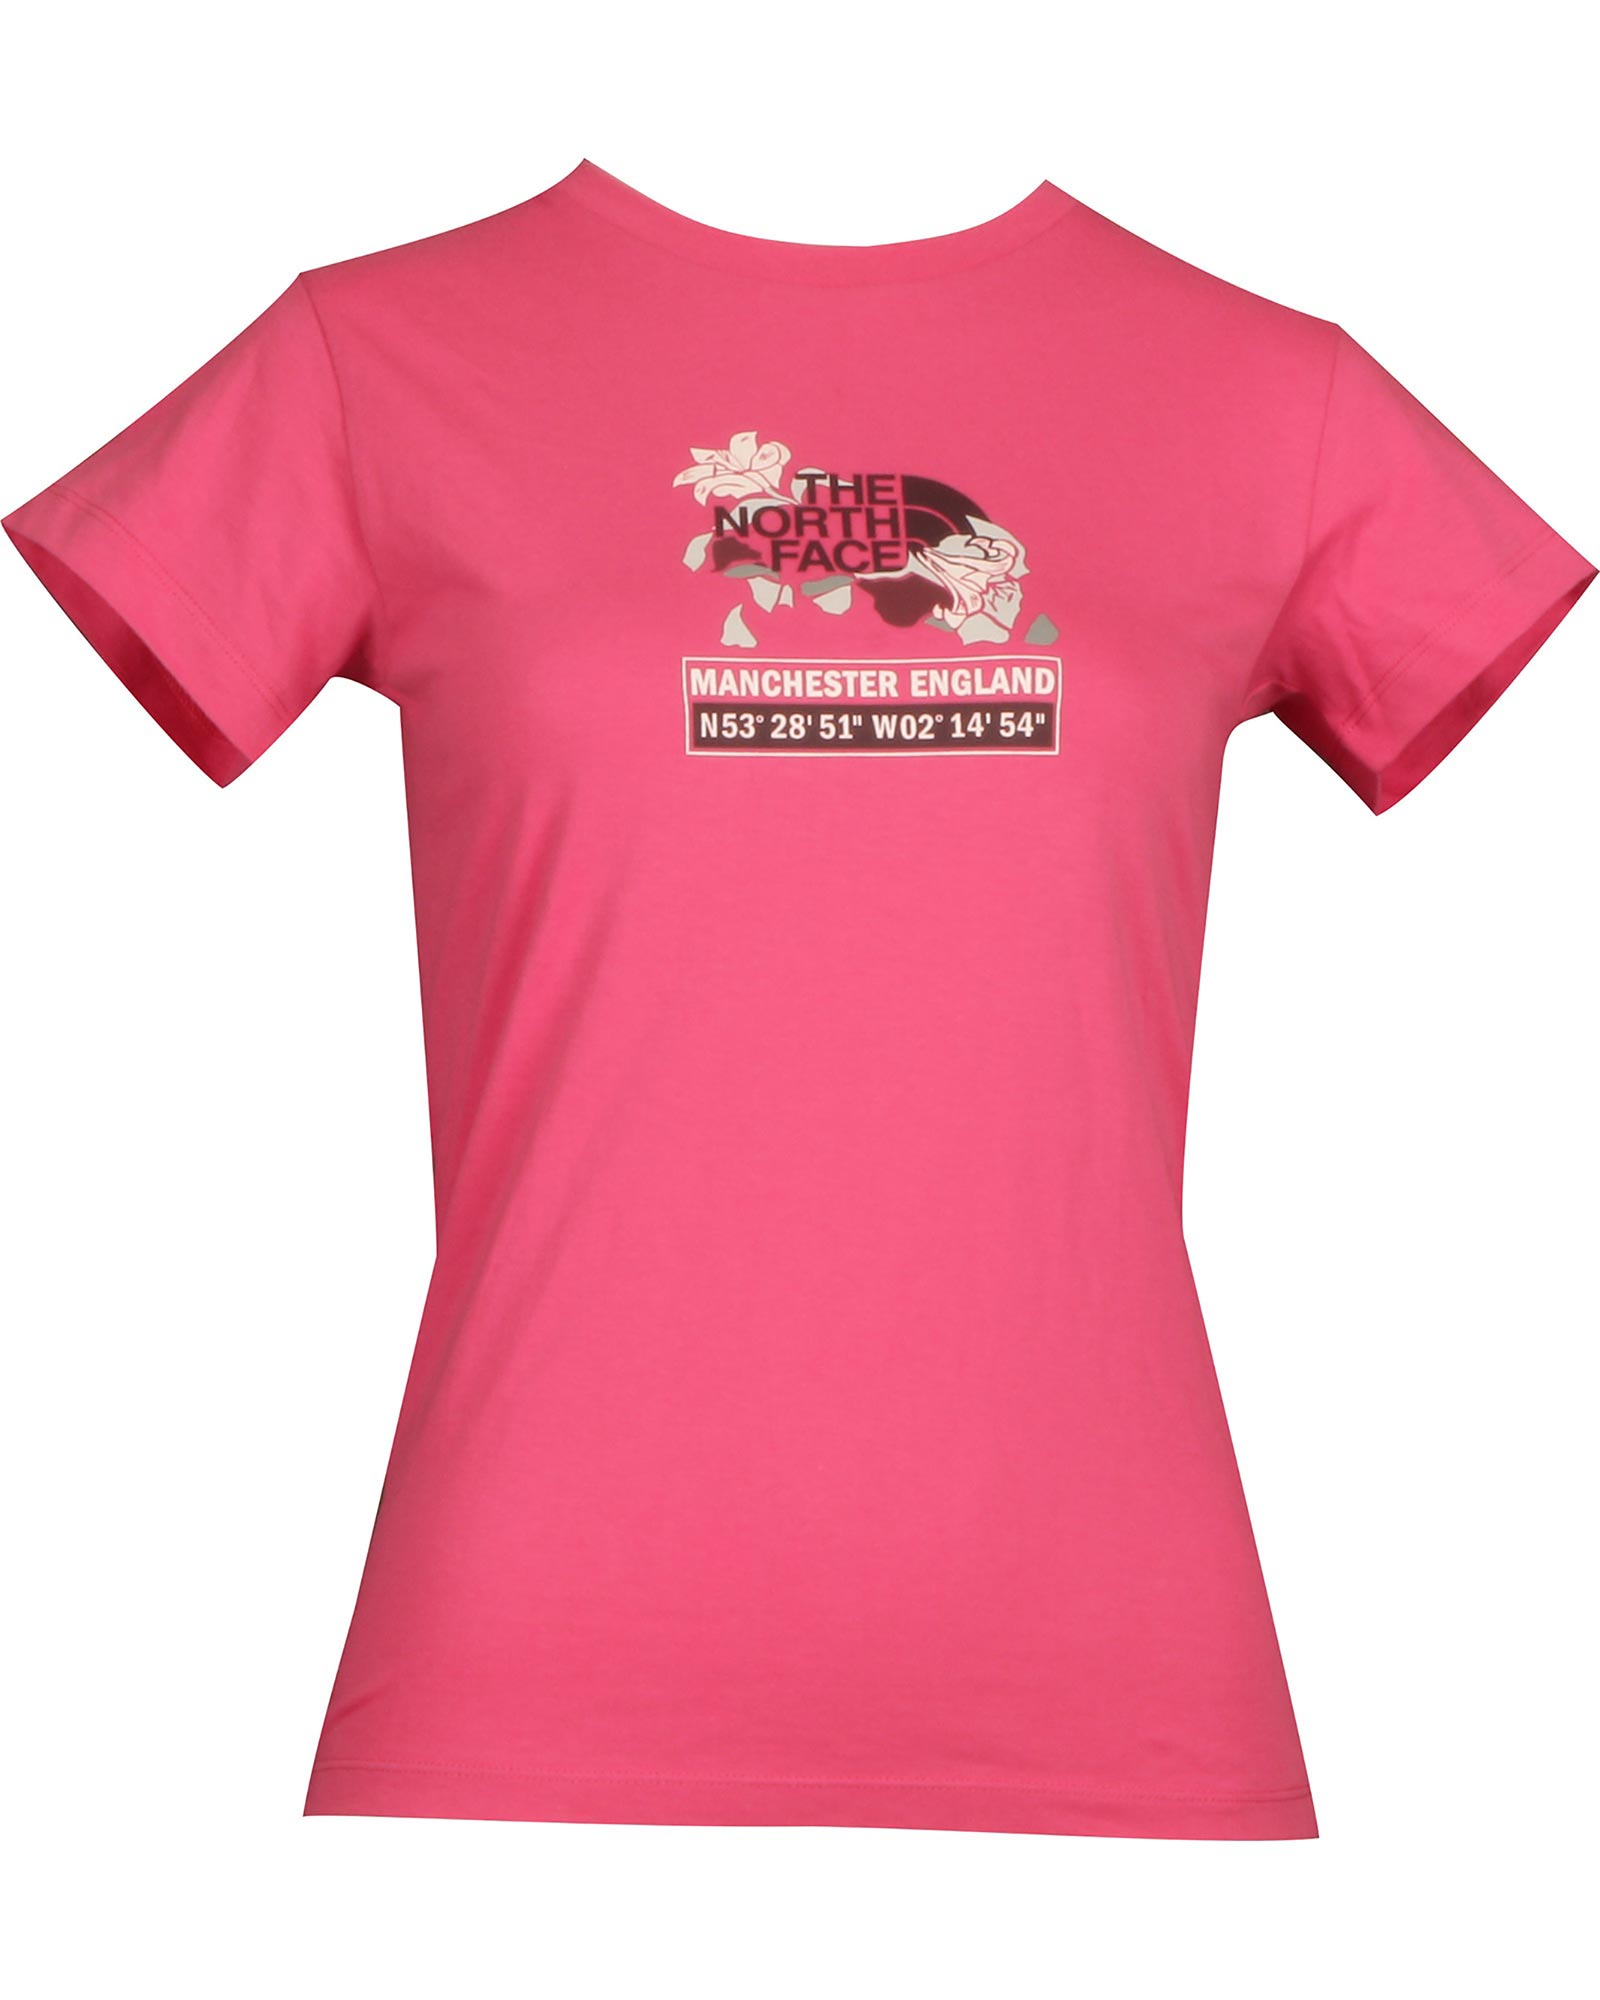 The North Face Manchester GPS Logo Women’s T Shirt - Fuchsia S